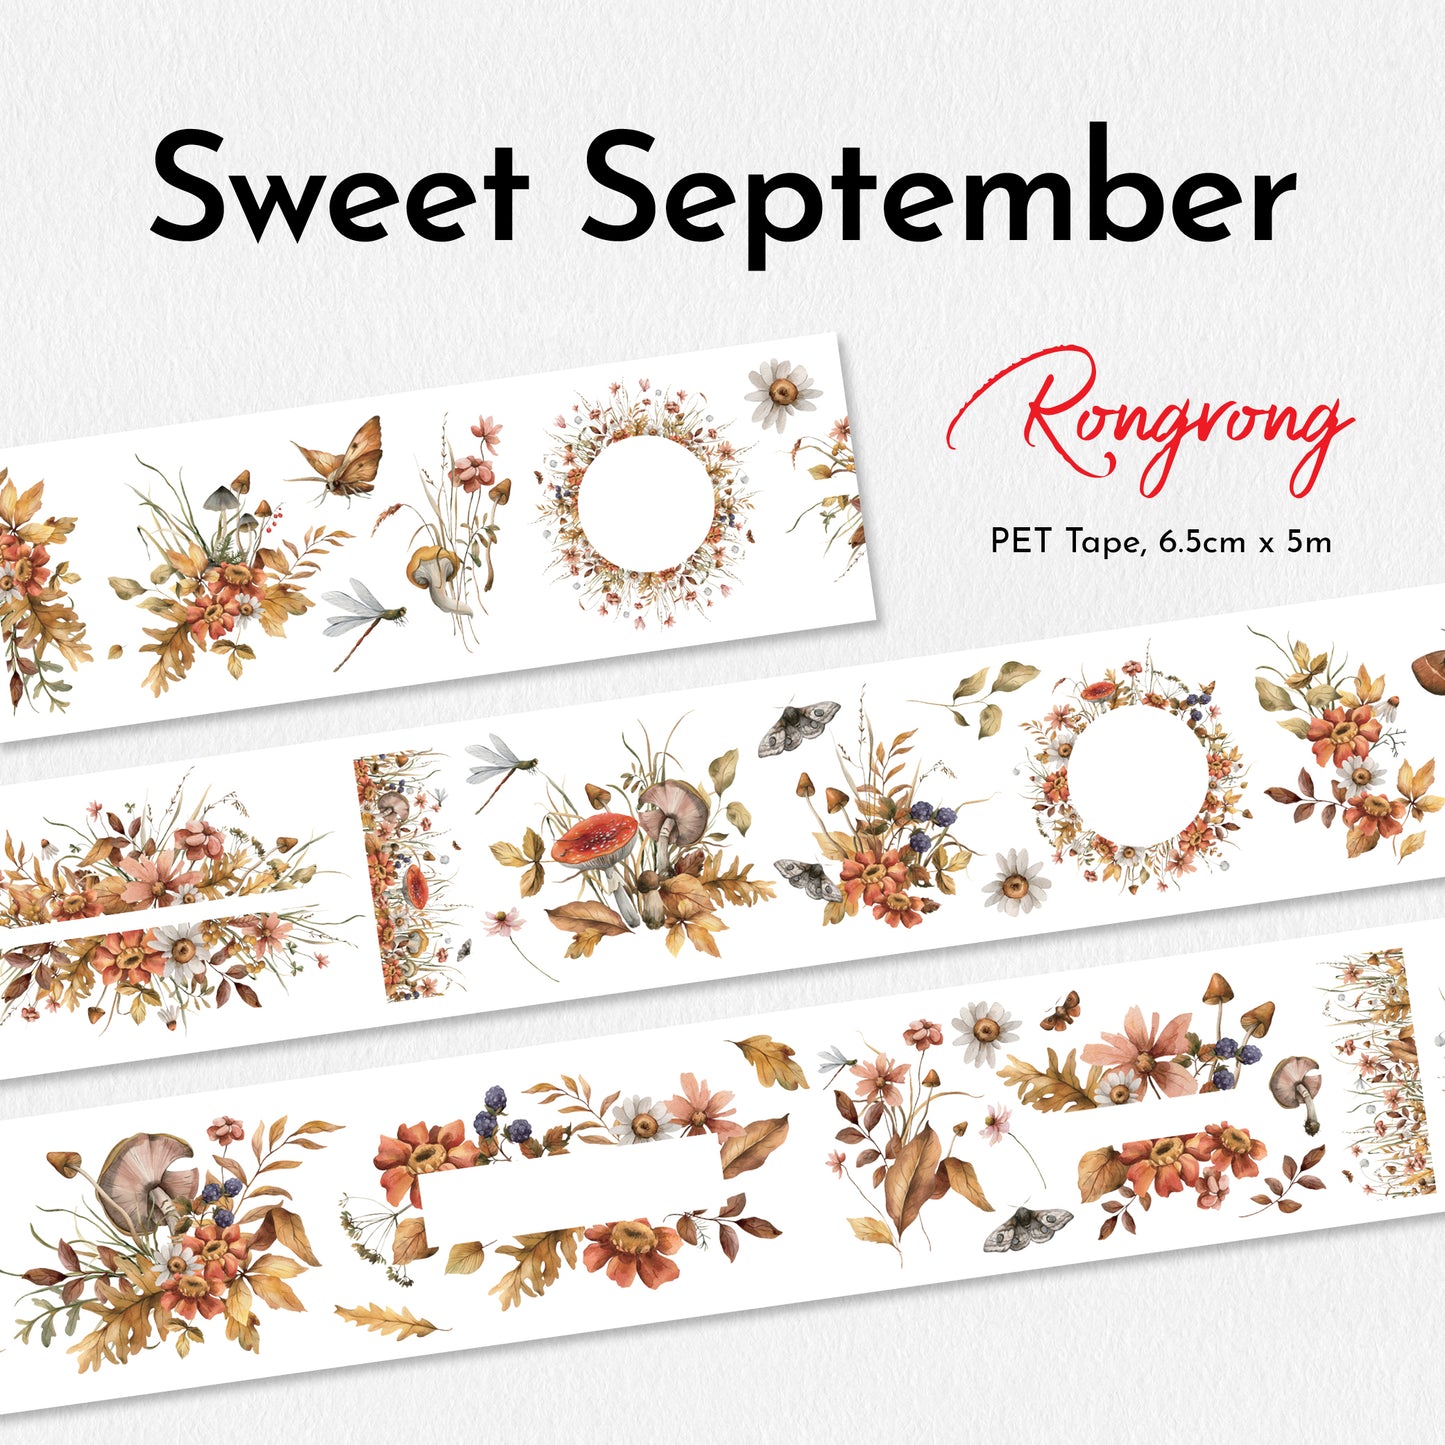 Rongrong: "Sweet September" PET tape